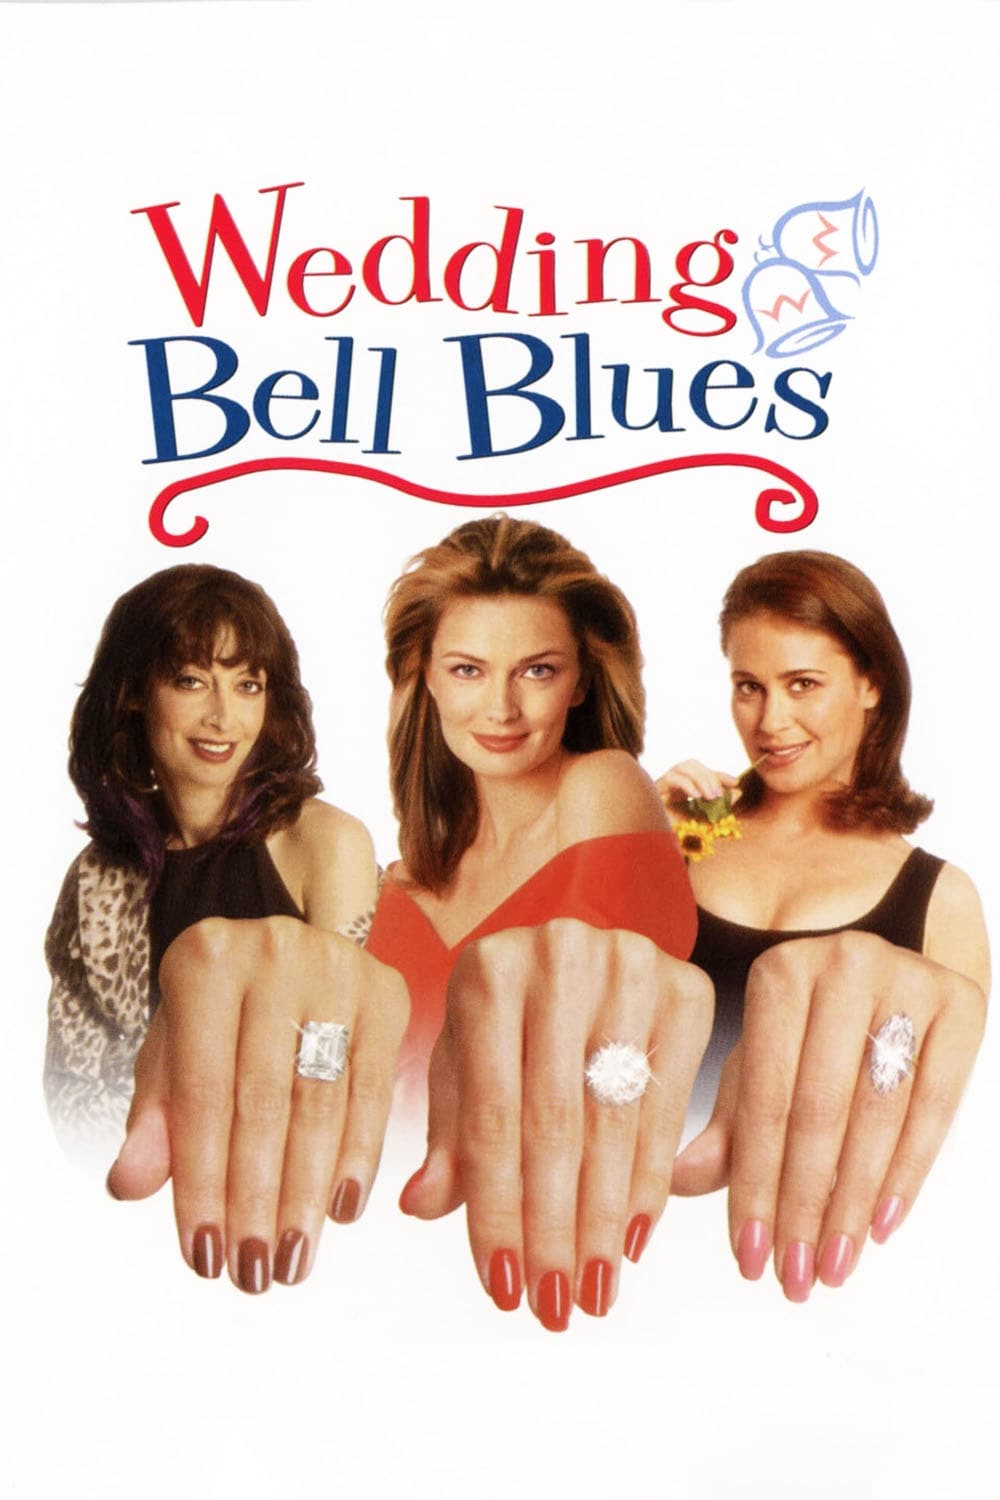 Wedding bell blues 2008